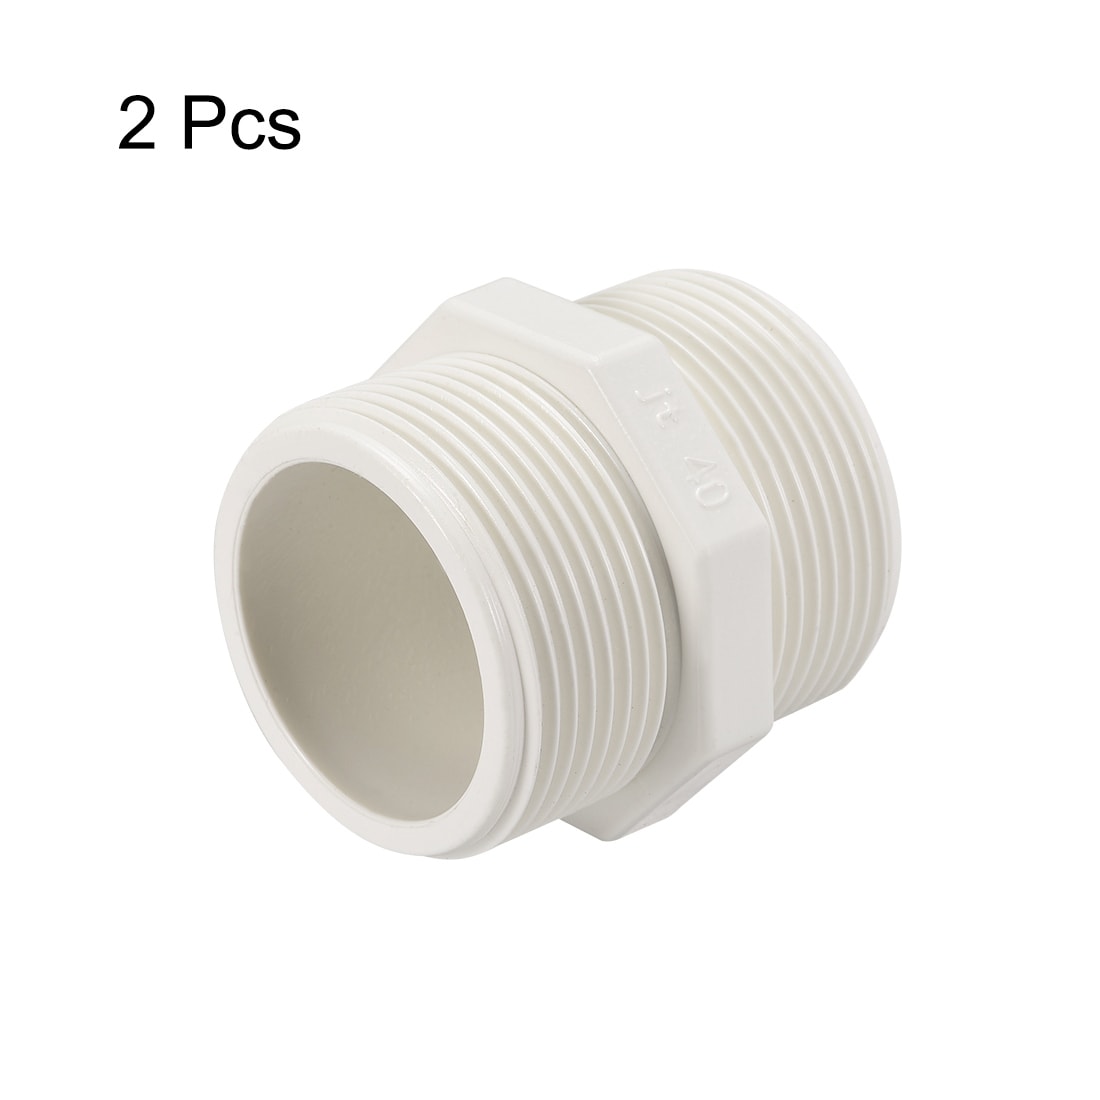 20 PCS 1/2 Male Plug Fittings Thread Brass Hex Head Pipe Cap Stopper Cover E-010 